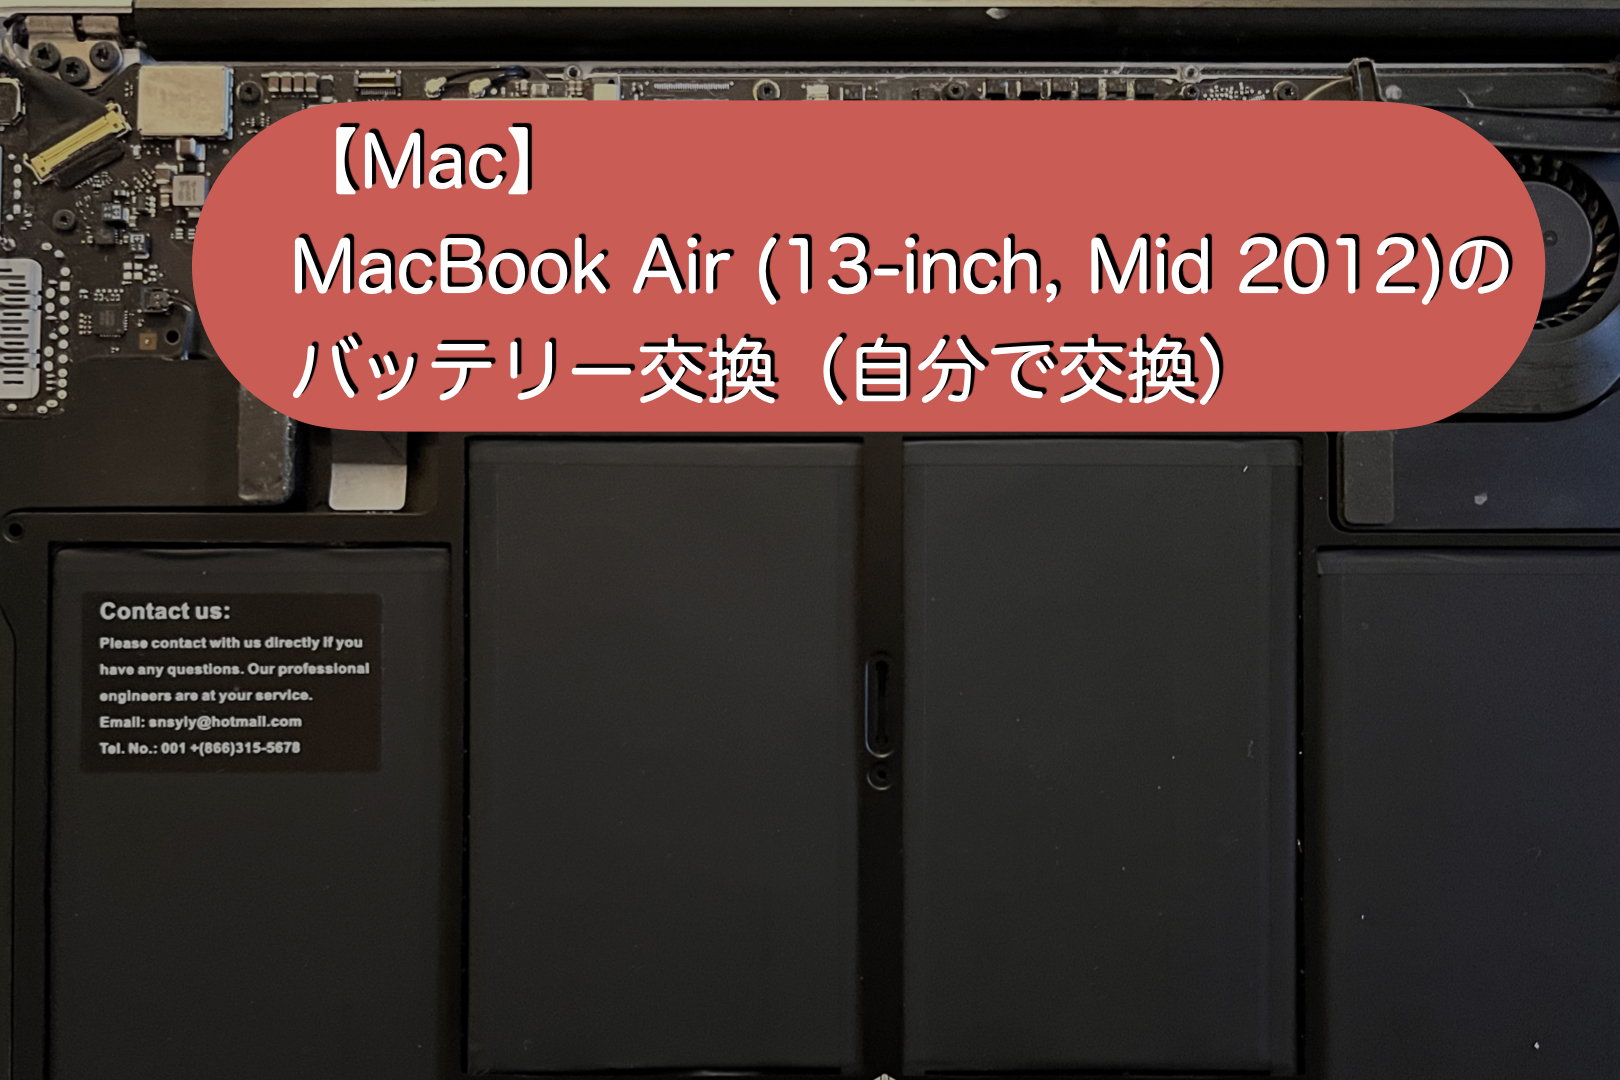 MacBook Air 13インチMid 2012 Ventura バッテリ良好